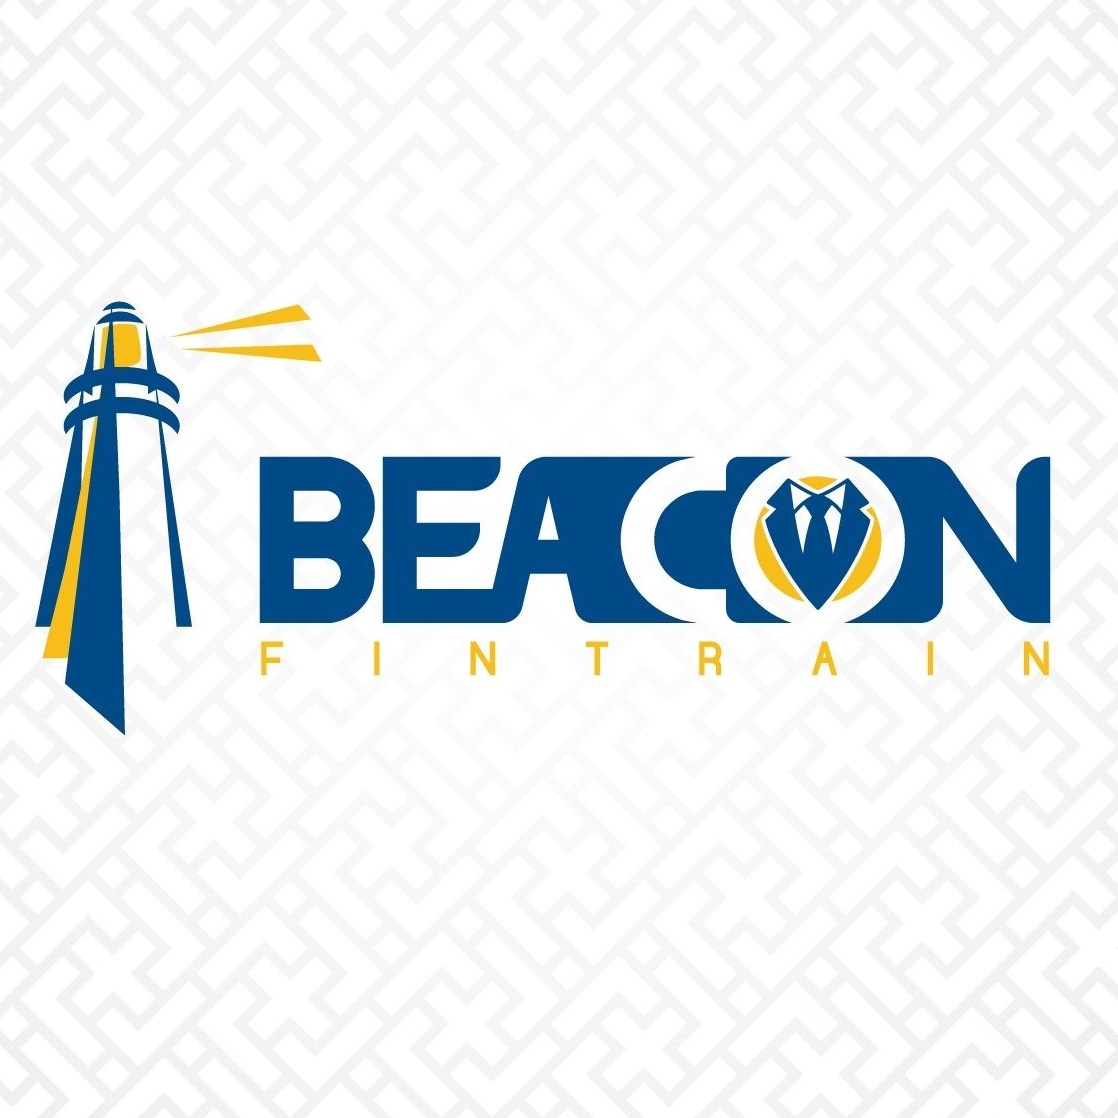 Beacon FinTrain